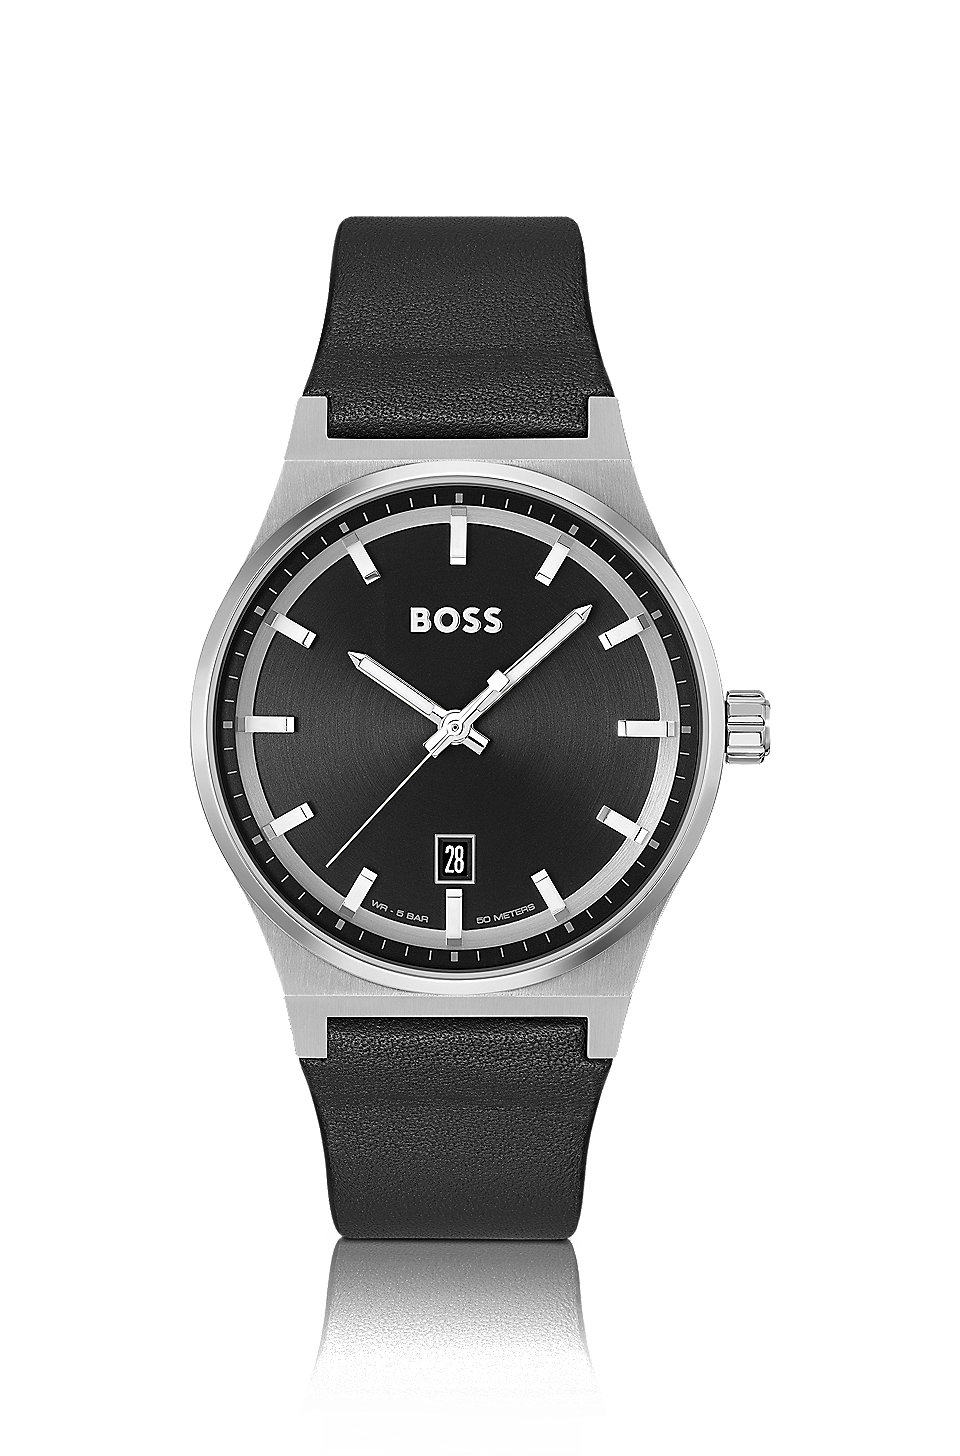 BOSS - ブラックダイヤル ウォッチ レザーストラップ